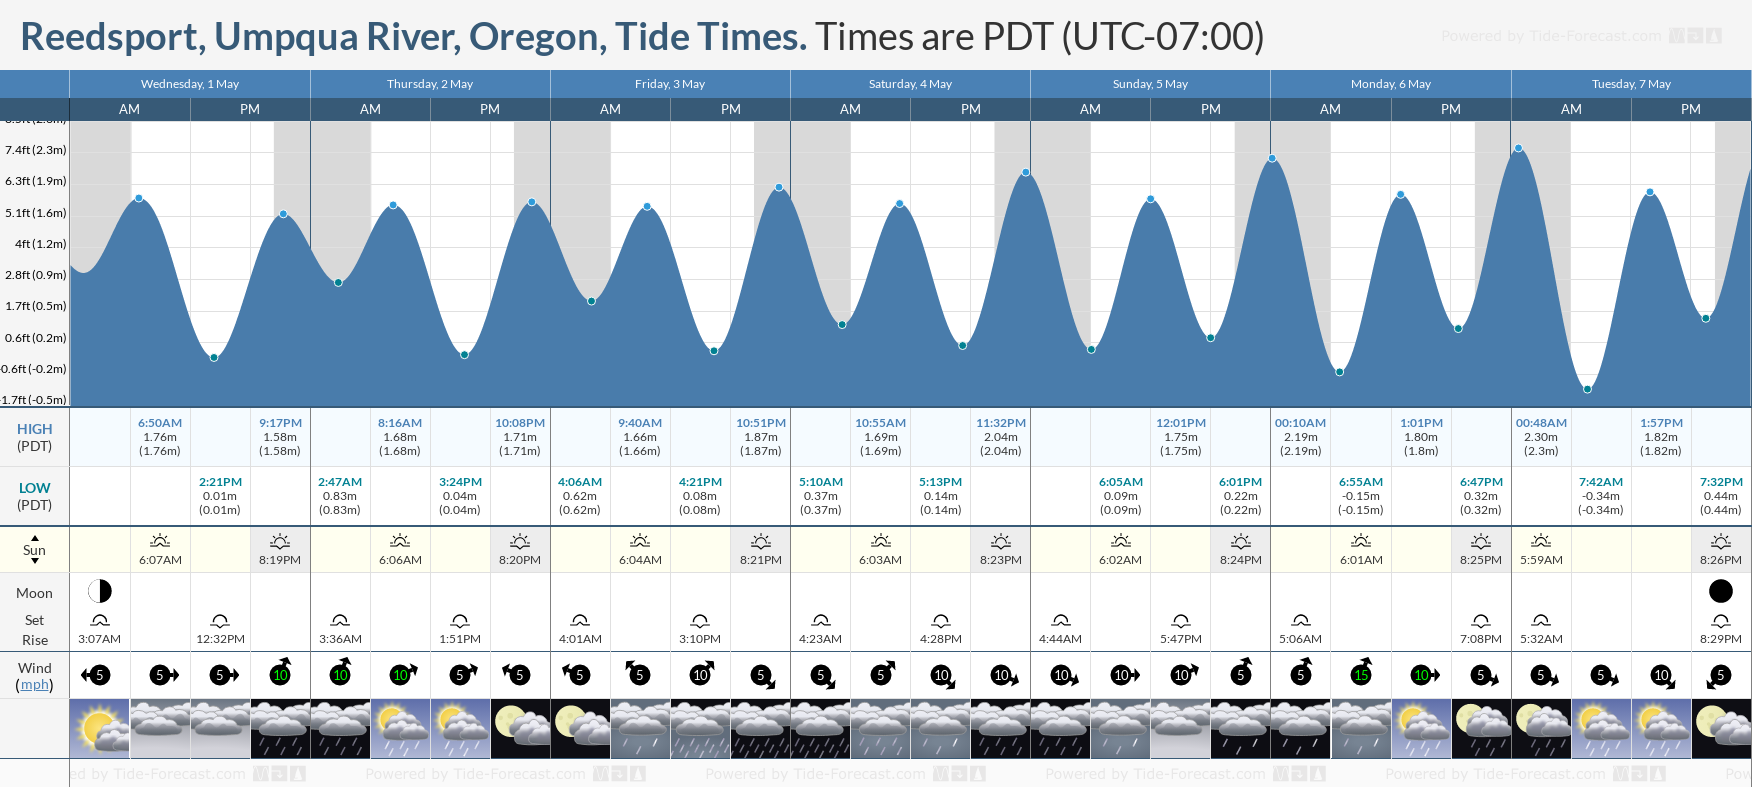 Reedsport, Umpqua River, Oregon Tide Chart including high and low tide tide times for the next 7 days